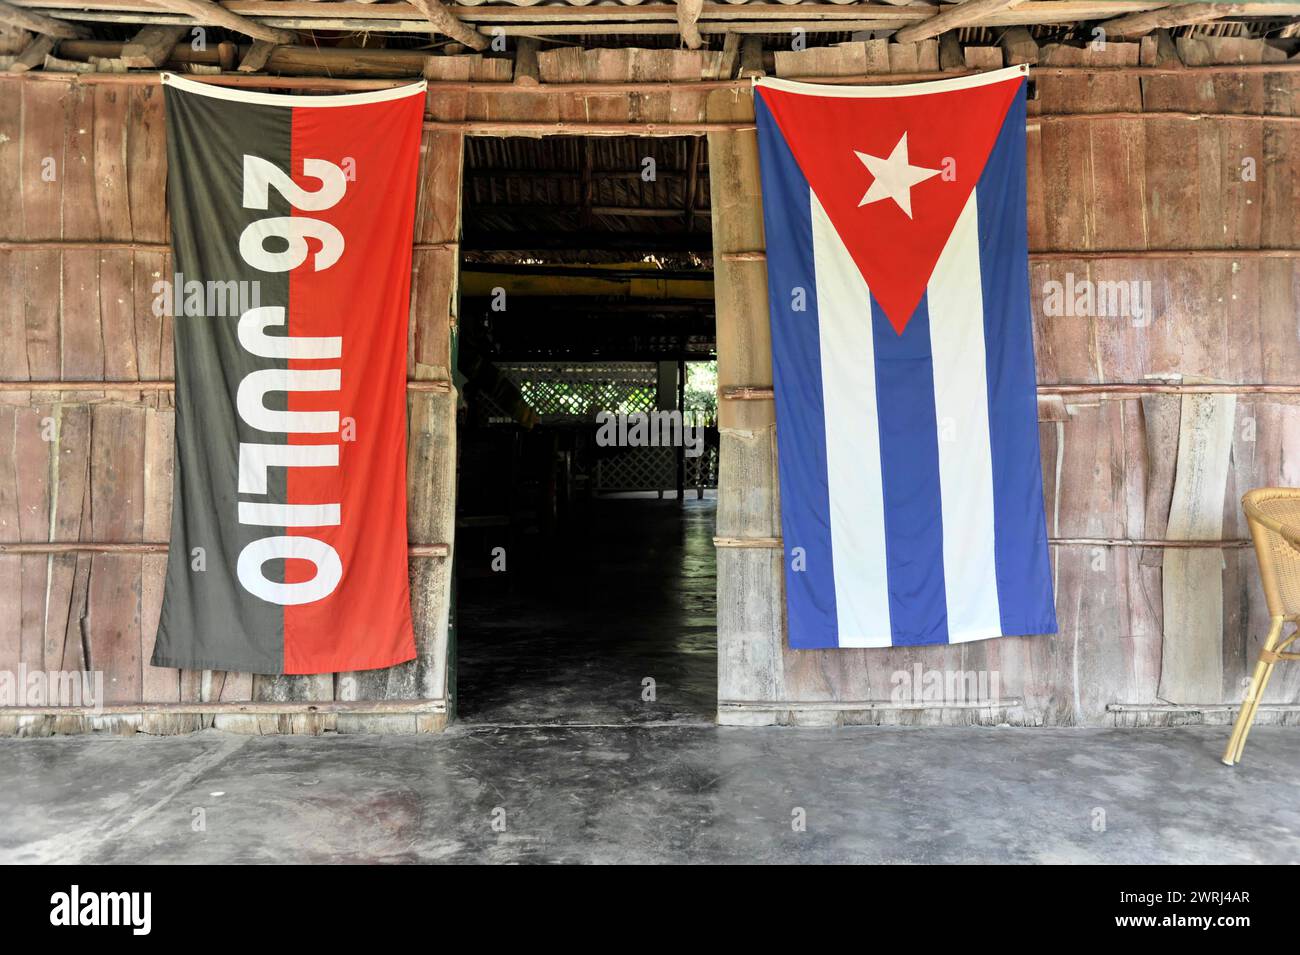 Cuban national flag next to a 26 July flag, revolutionary symbols, Trinidad, Cuba, Central America Stock Photo